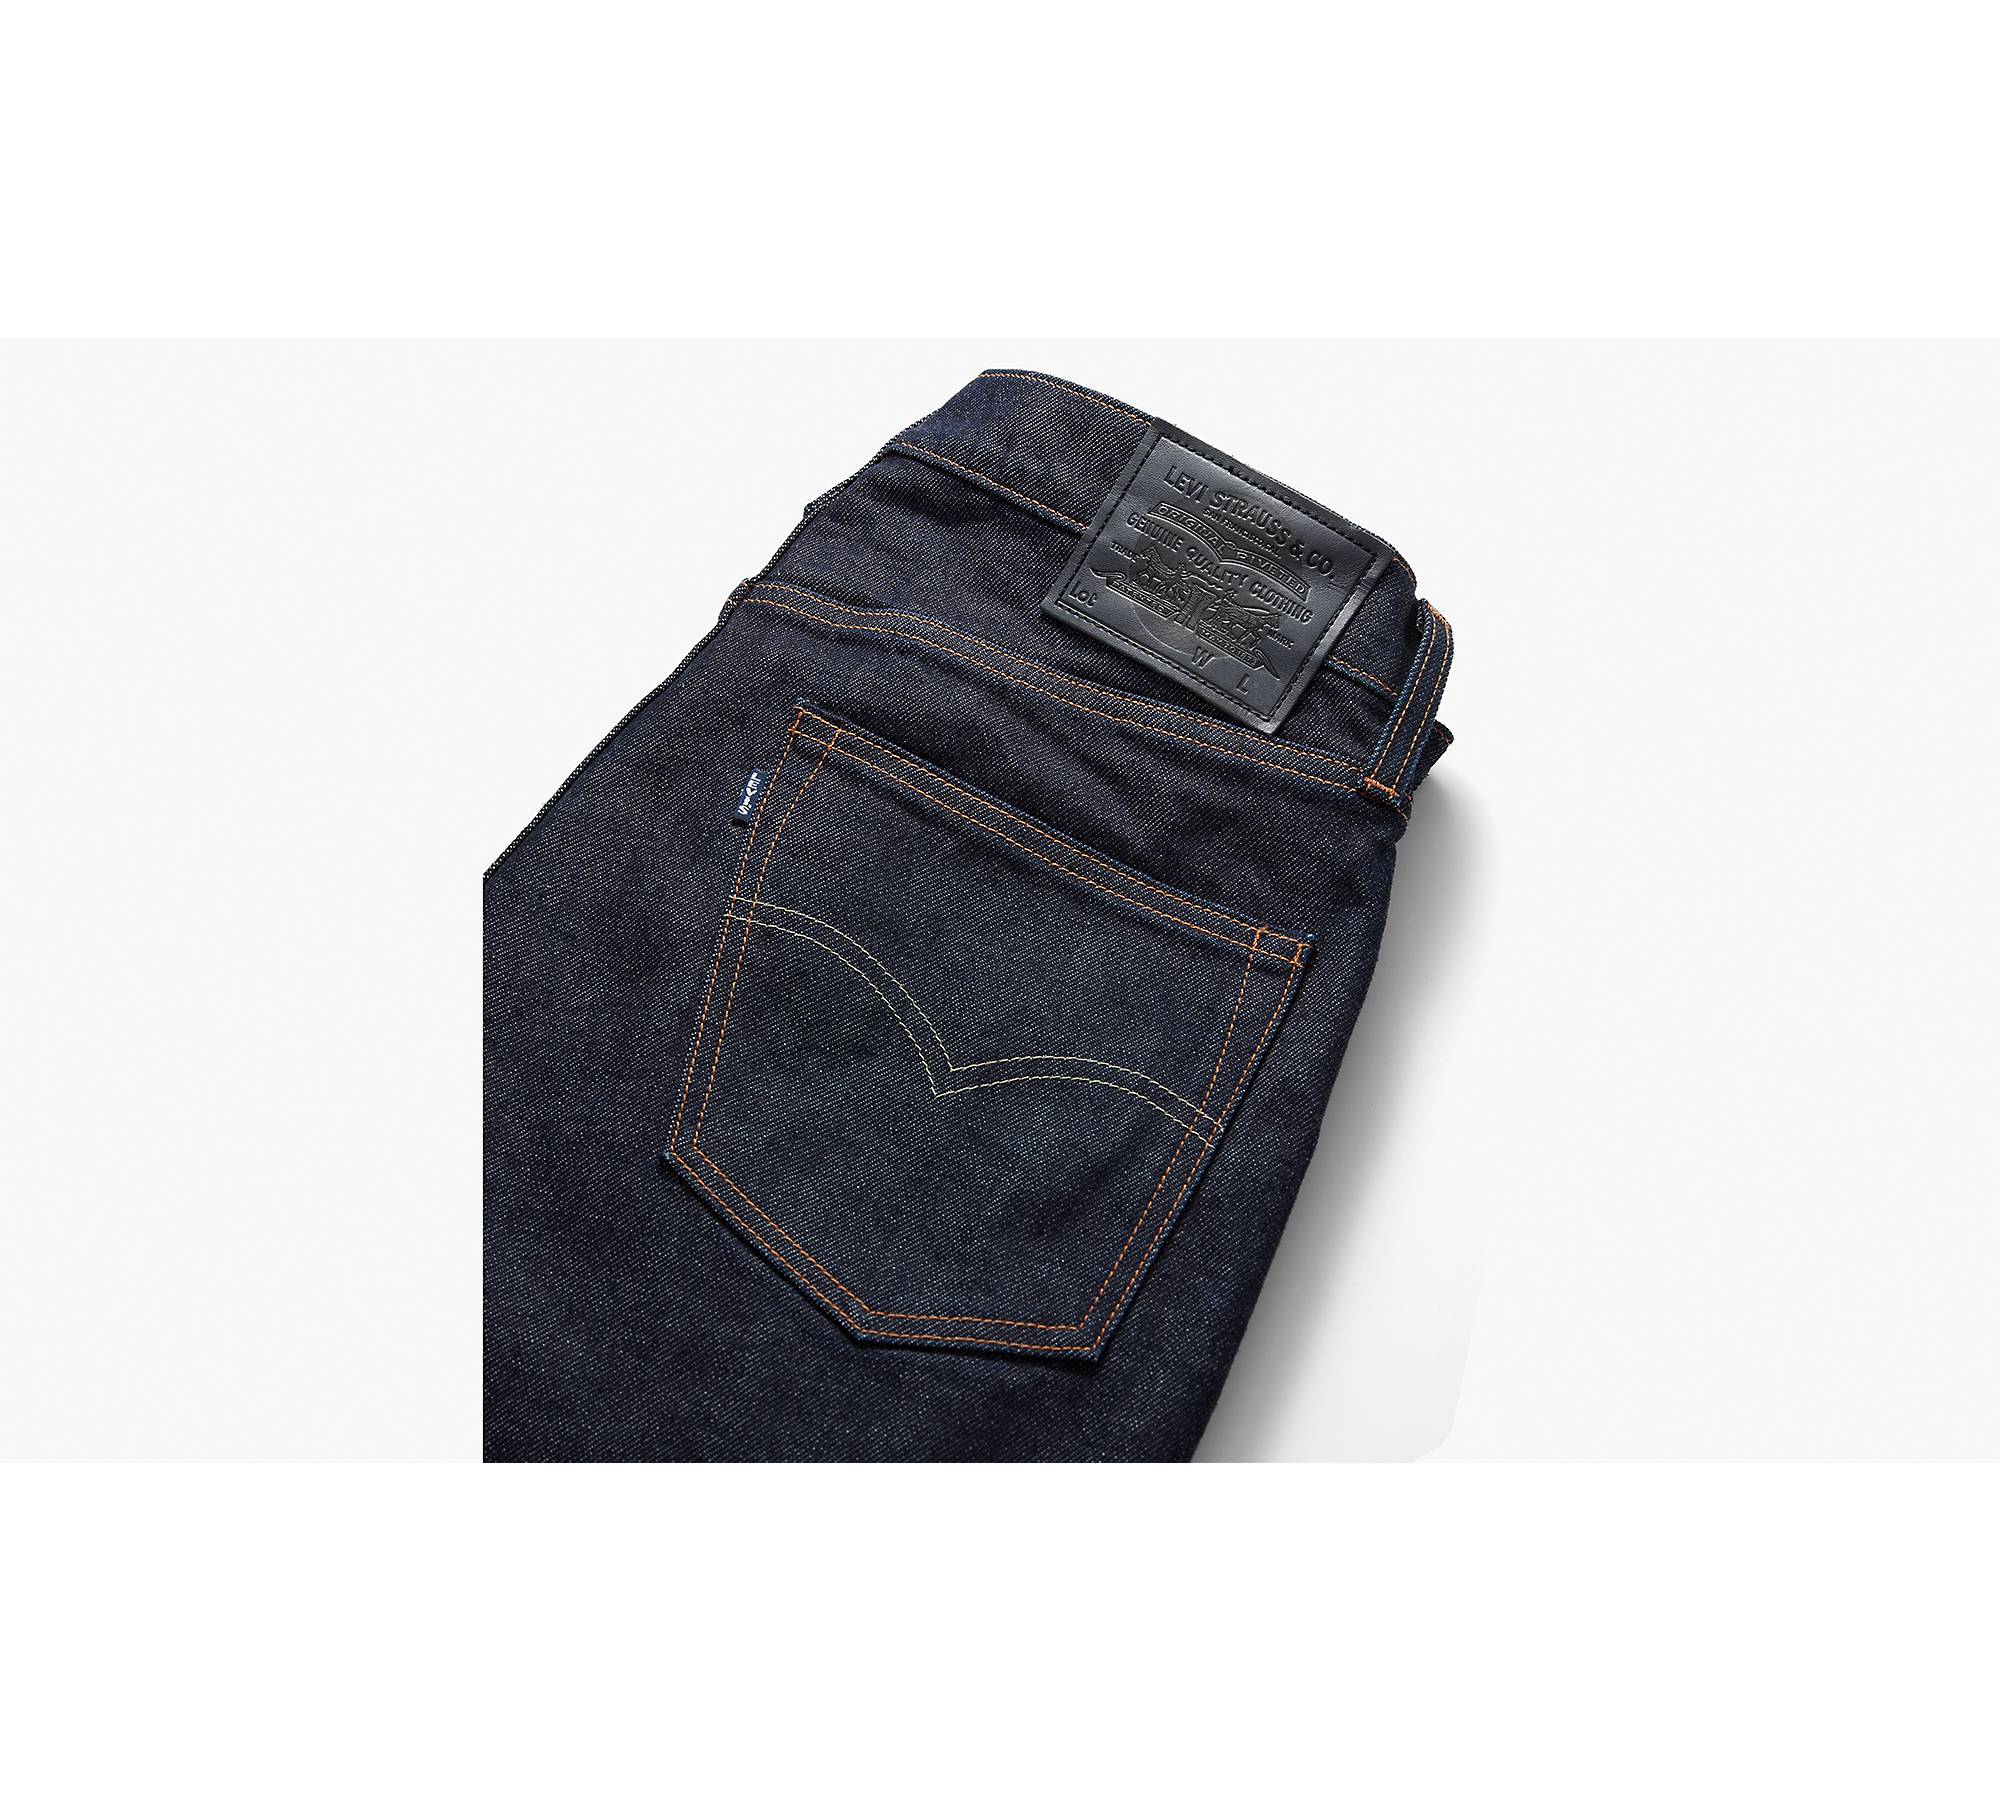 Japanese Selvedge 512™ Slim Taper Fit Men's Jeans - Dark Wash